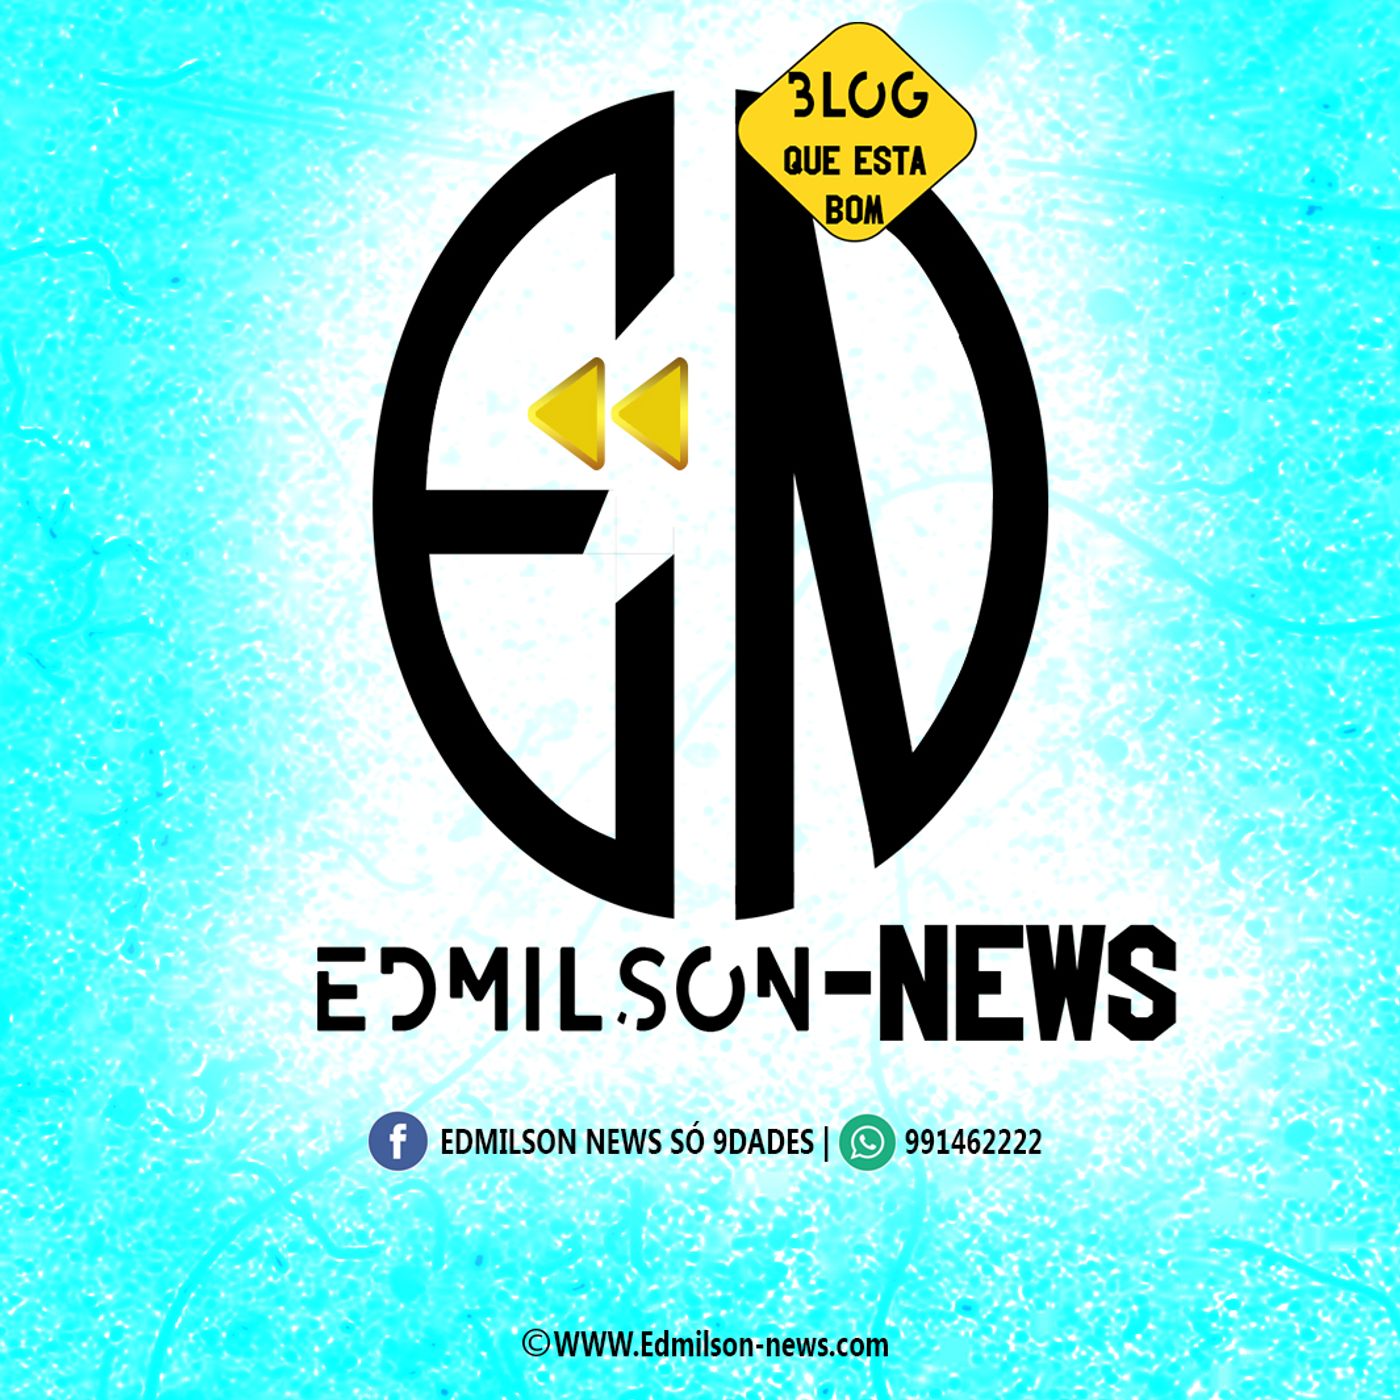 Edmilson News